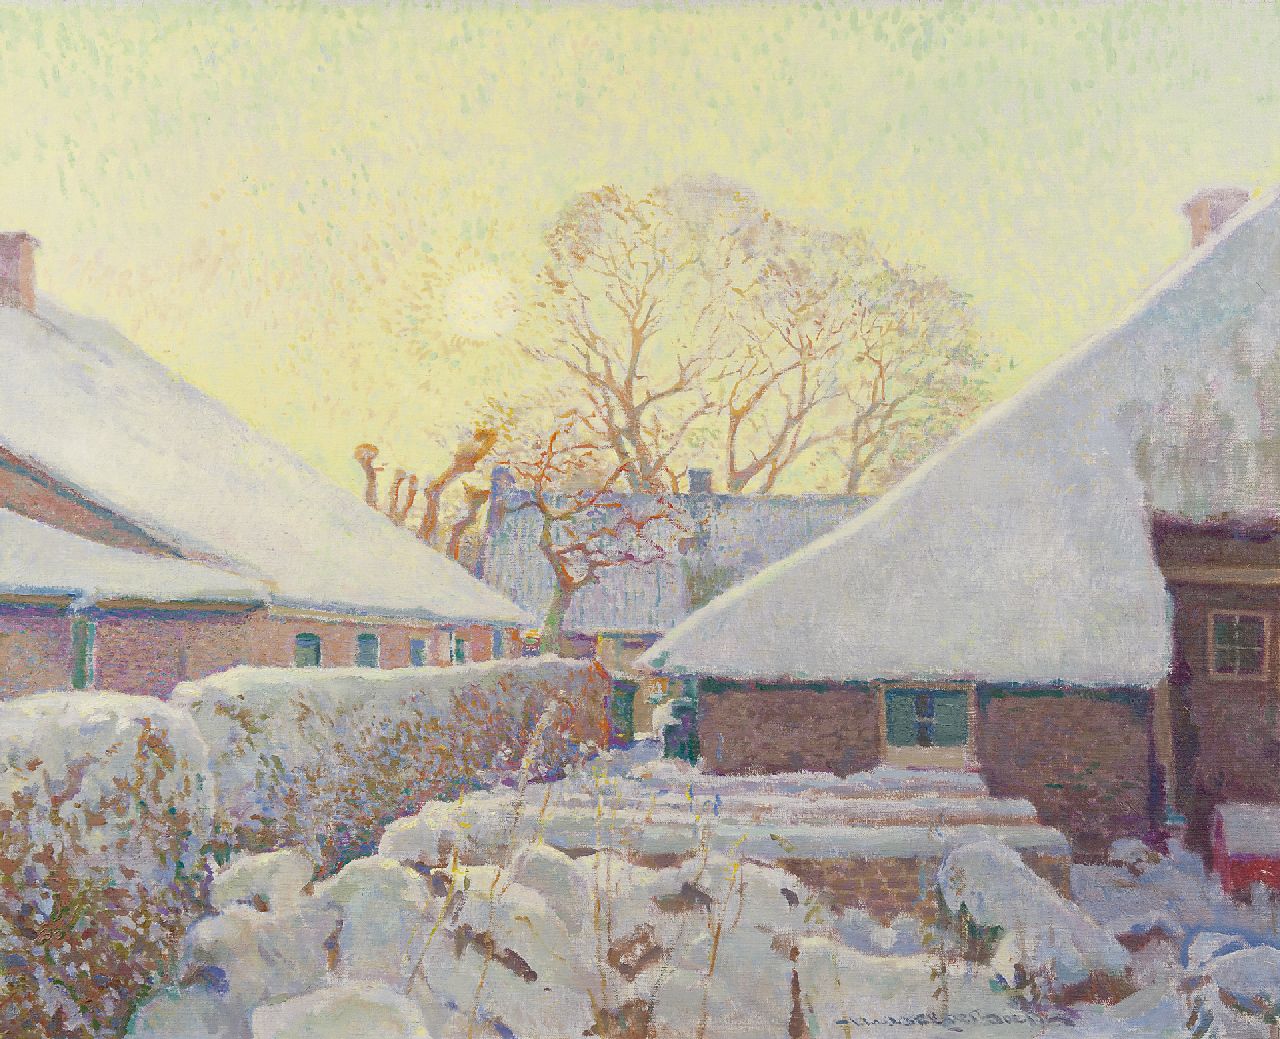 Boer H. de | Hessel de Boer, Snow-covered farms in Blaricum, Öl auf Leinwand 60,2 x 74,0 cm, signed c.r.